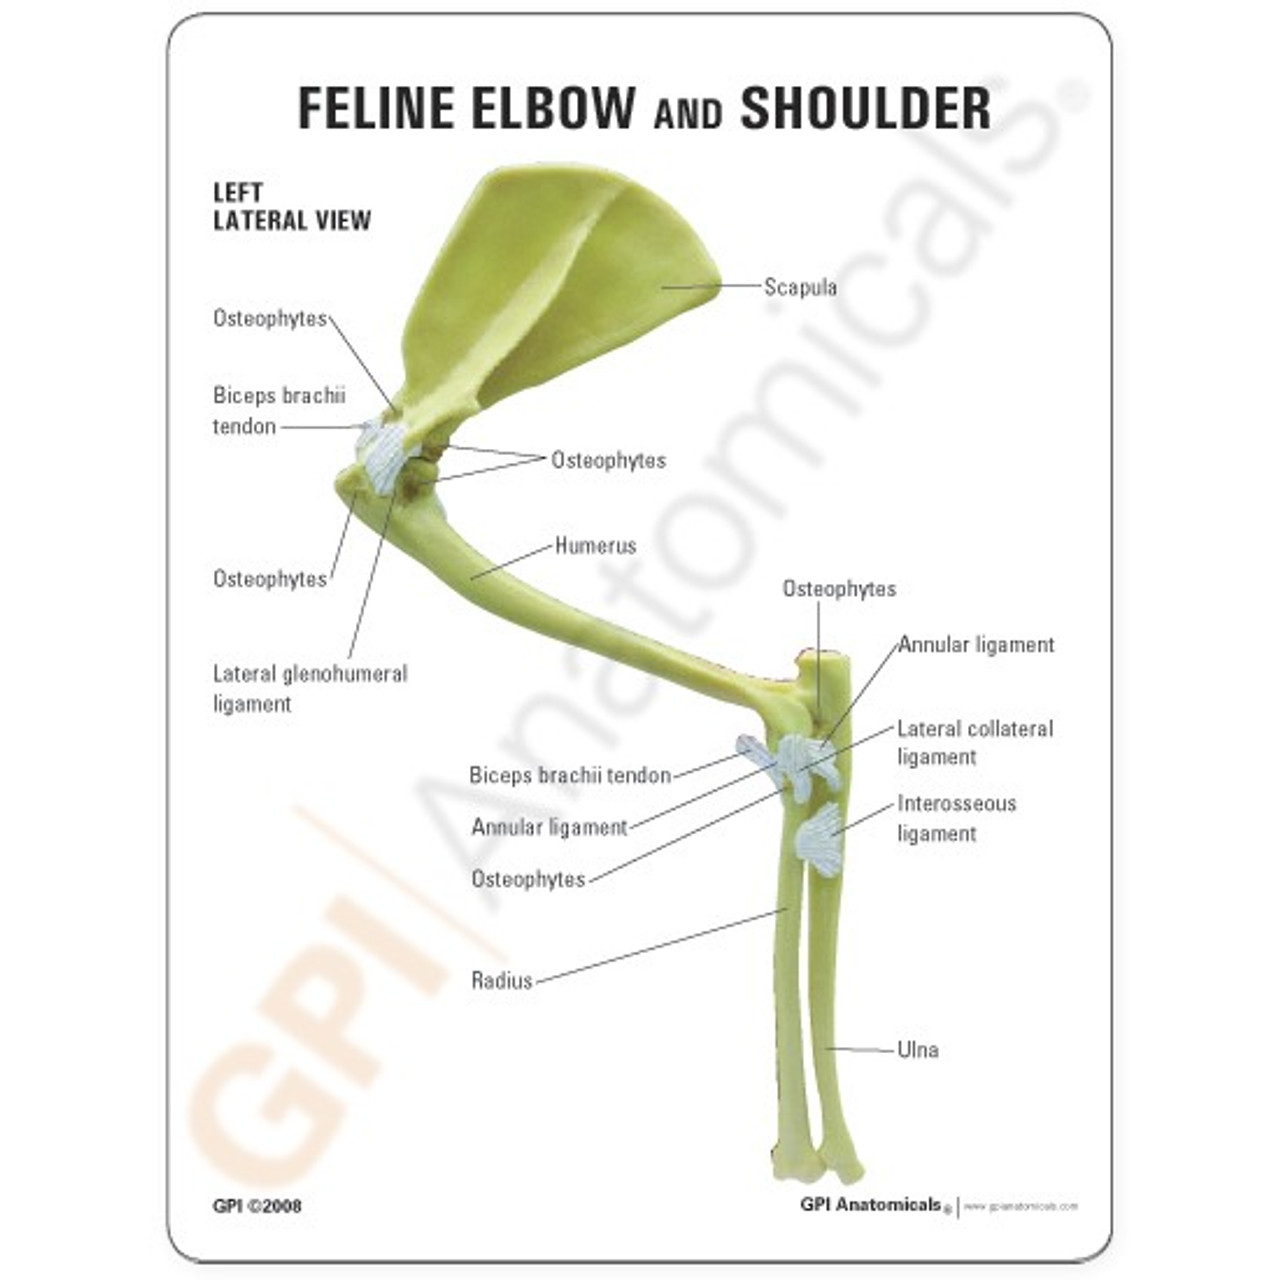 Feline Elbow and Shoulder Model Description Card